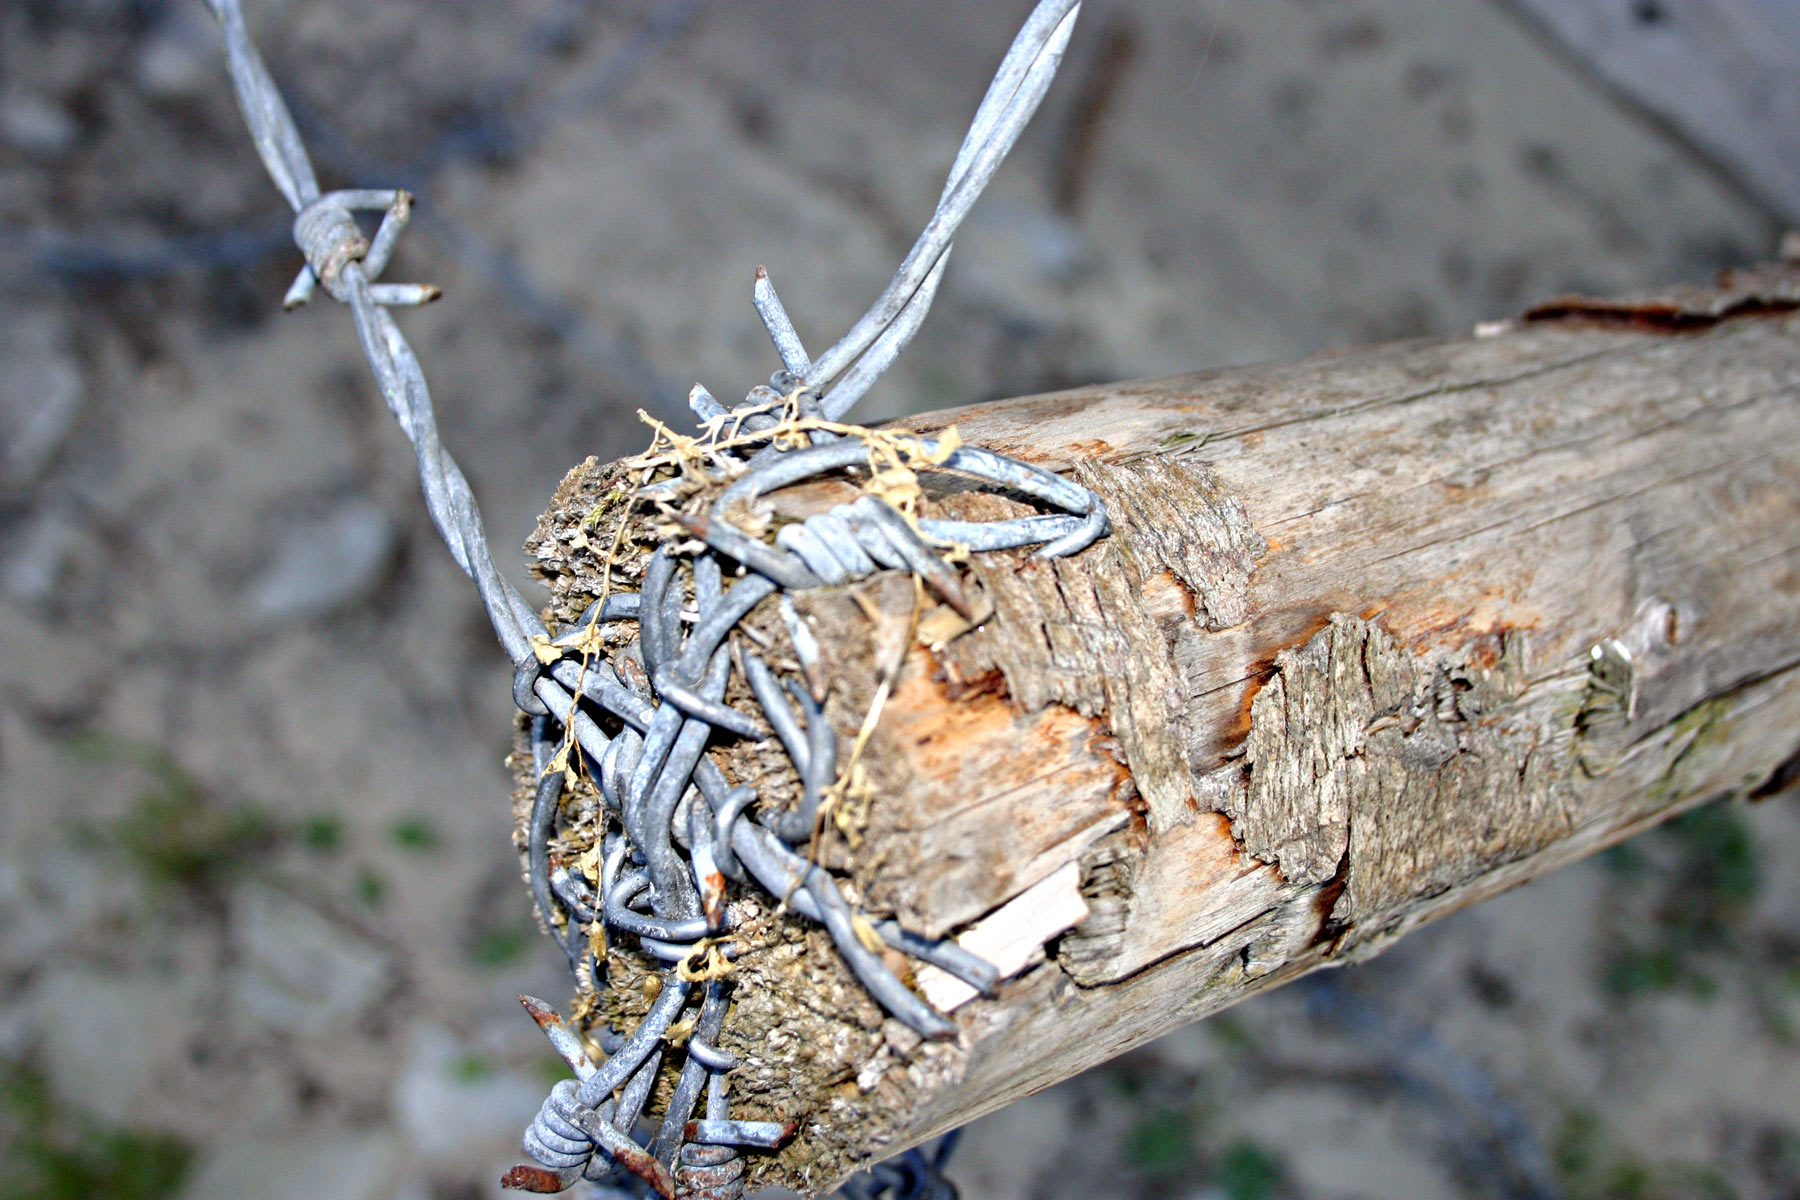 Barbed wire closeup photo